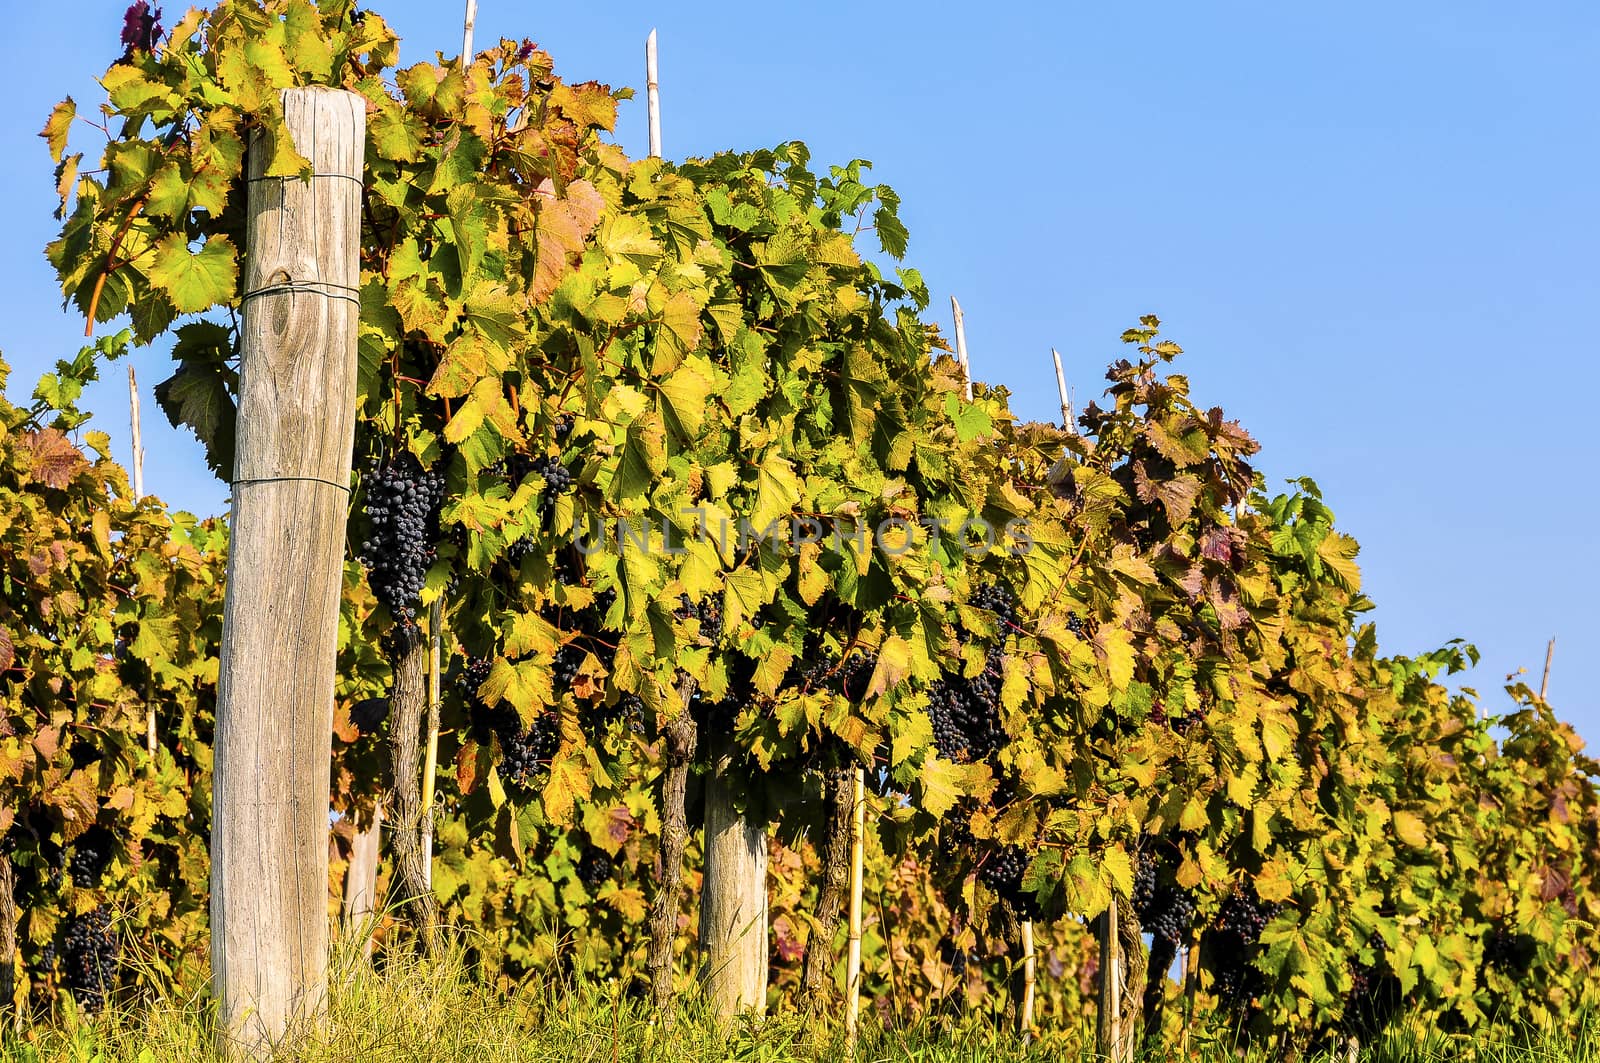 Vineyard in autumn by asafaric